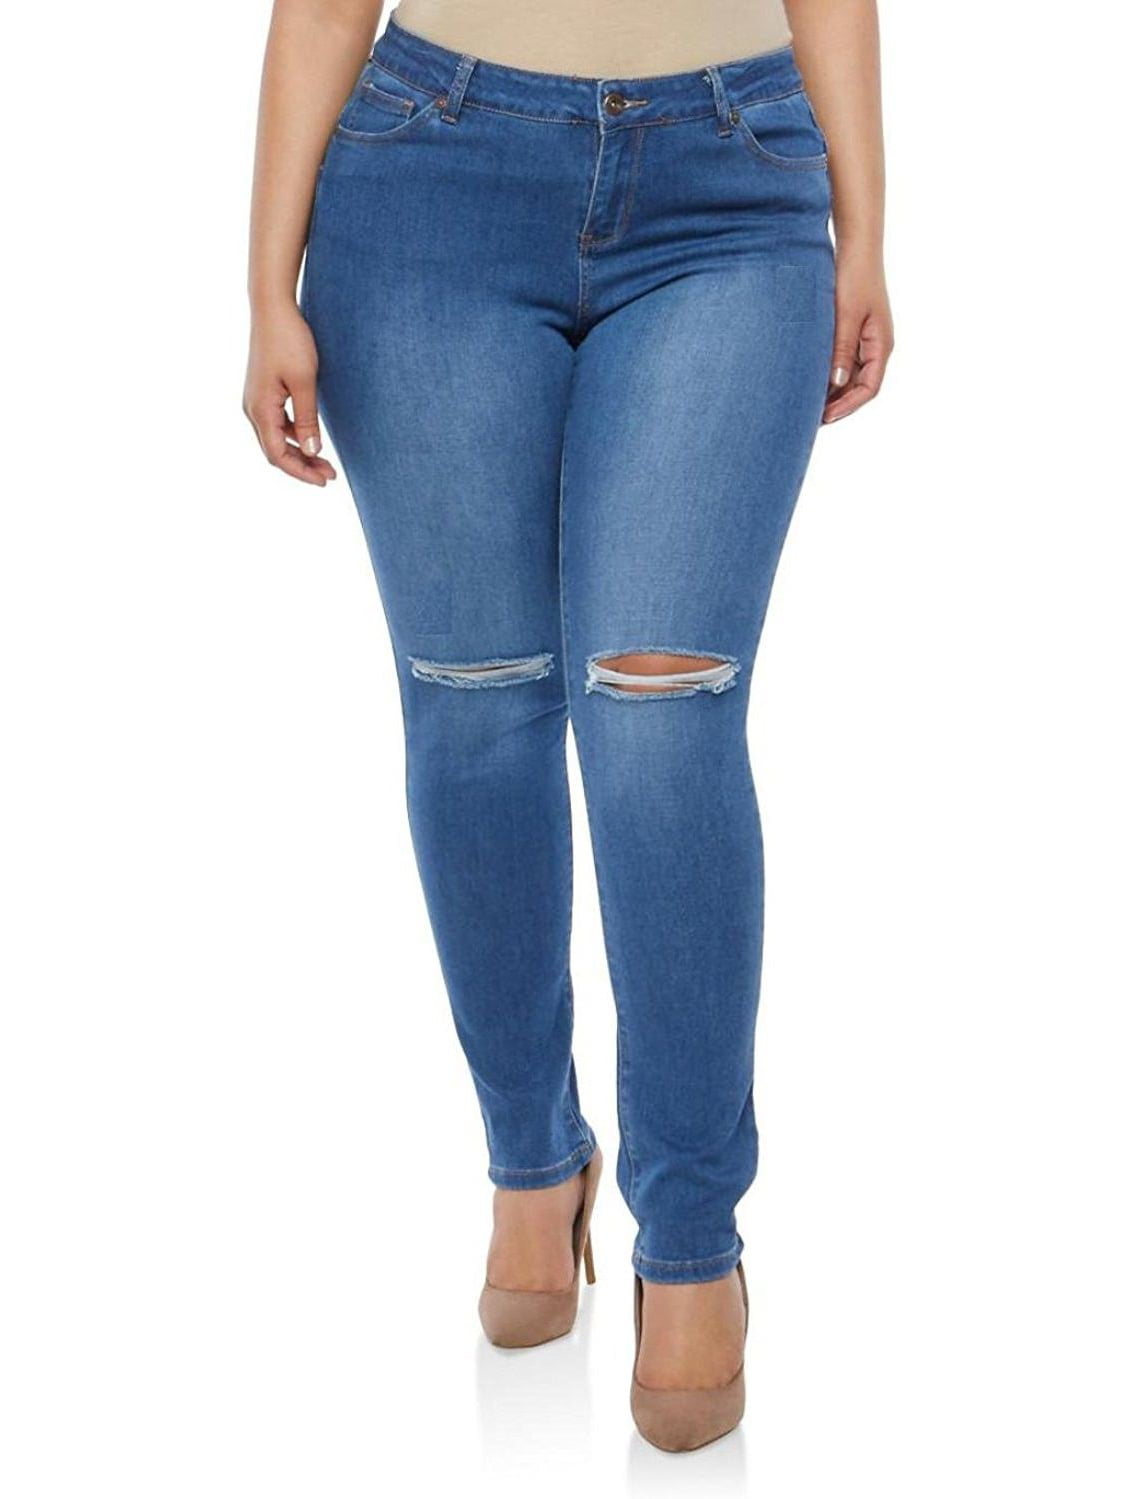 SIM Men's Slim Fit Jeans Casual Ninth Pants Knee Hole Trousers Seluar |  Lazada